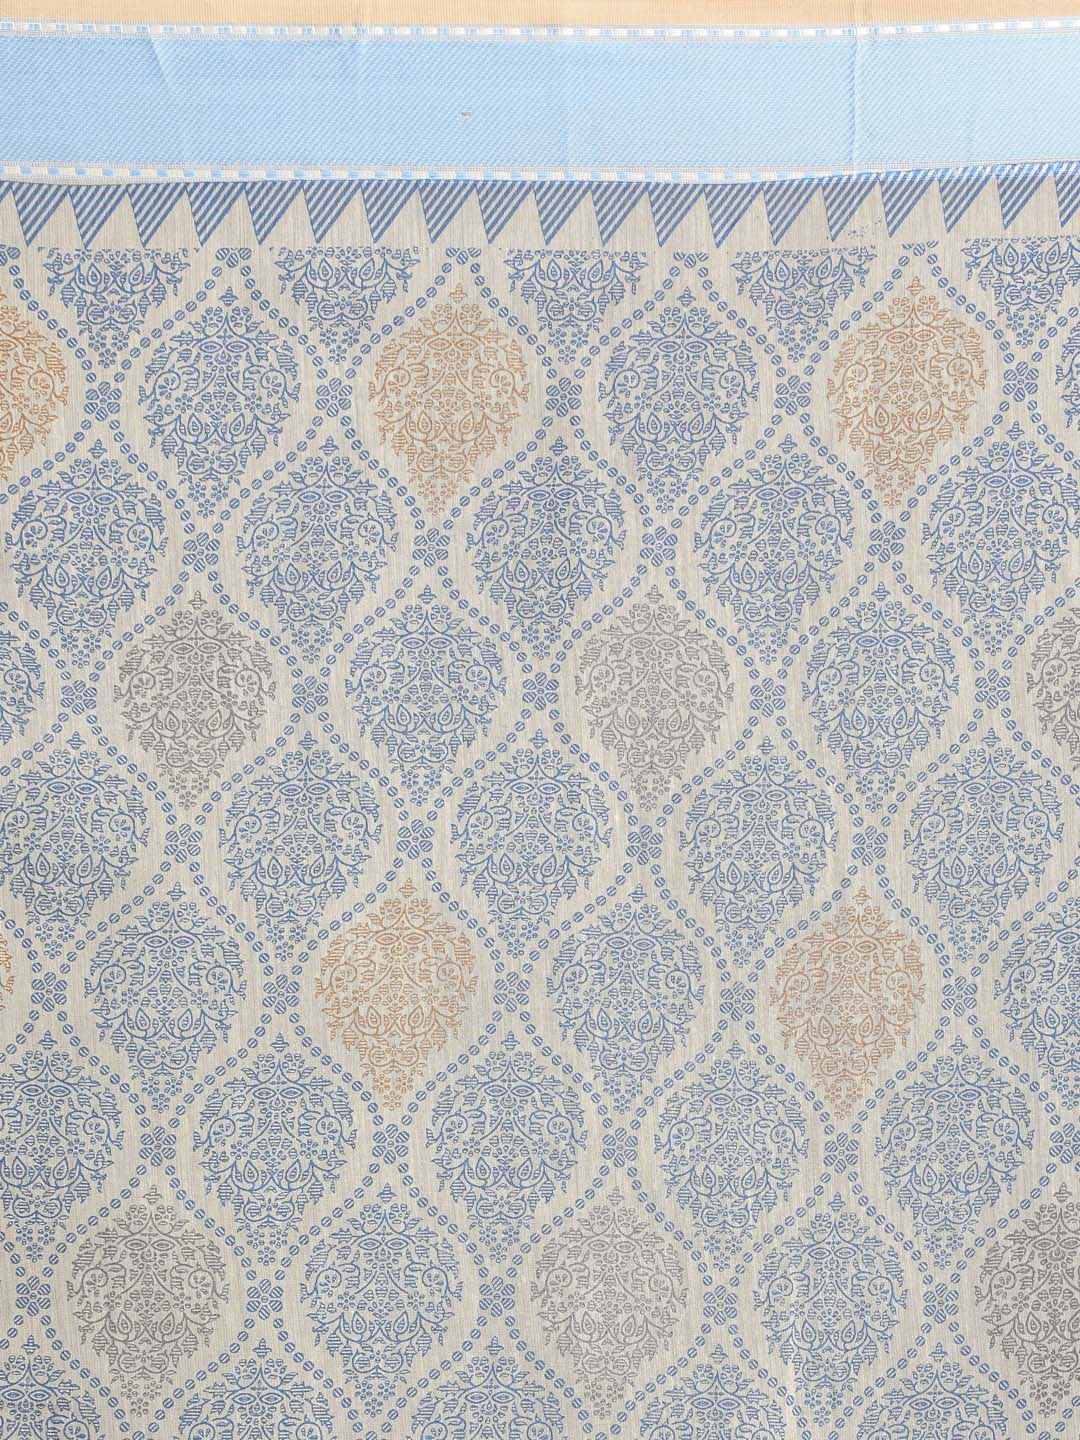 Indethnic Printed Cotton Blend Saree in Blue - Saree Detail View